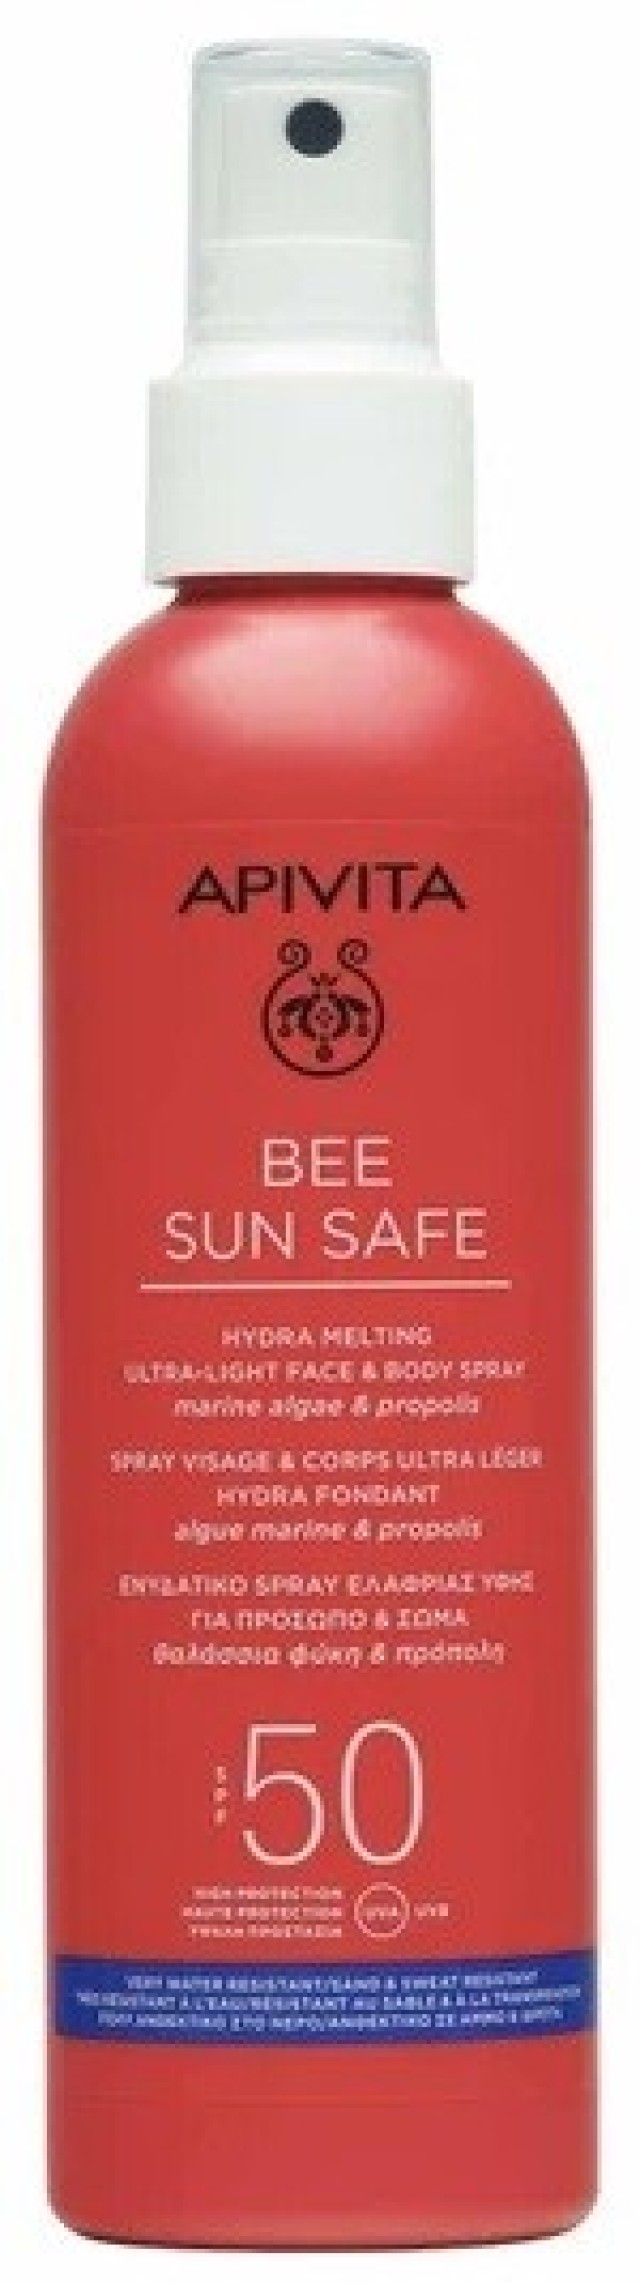 Apivita Bee Sun Safe Ultra Light Face & Body Spray Ενυδατικό Spray Ελαφριάς Υφής για Πρόσωπο & Σώμα spf50 200ml